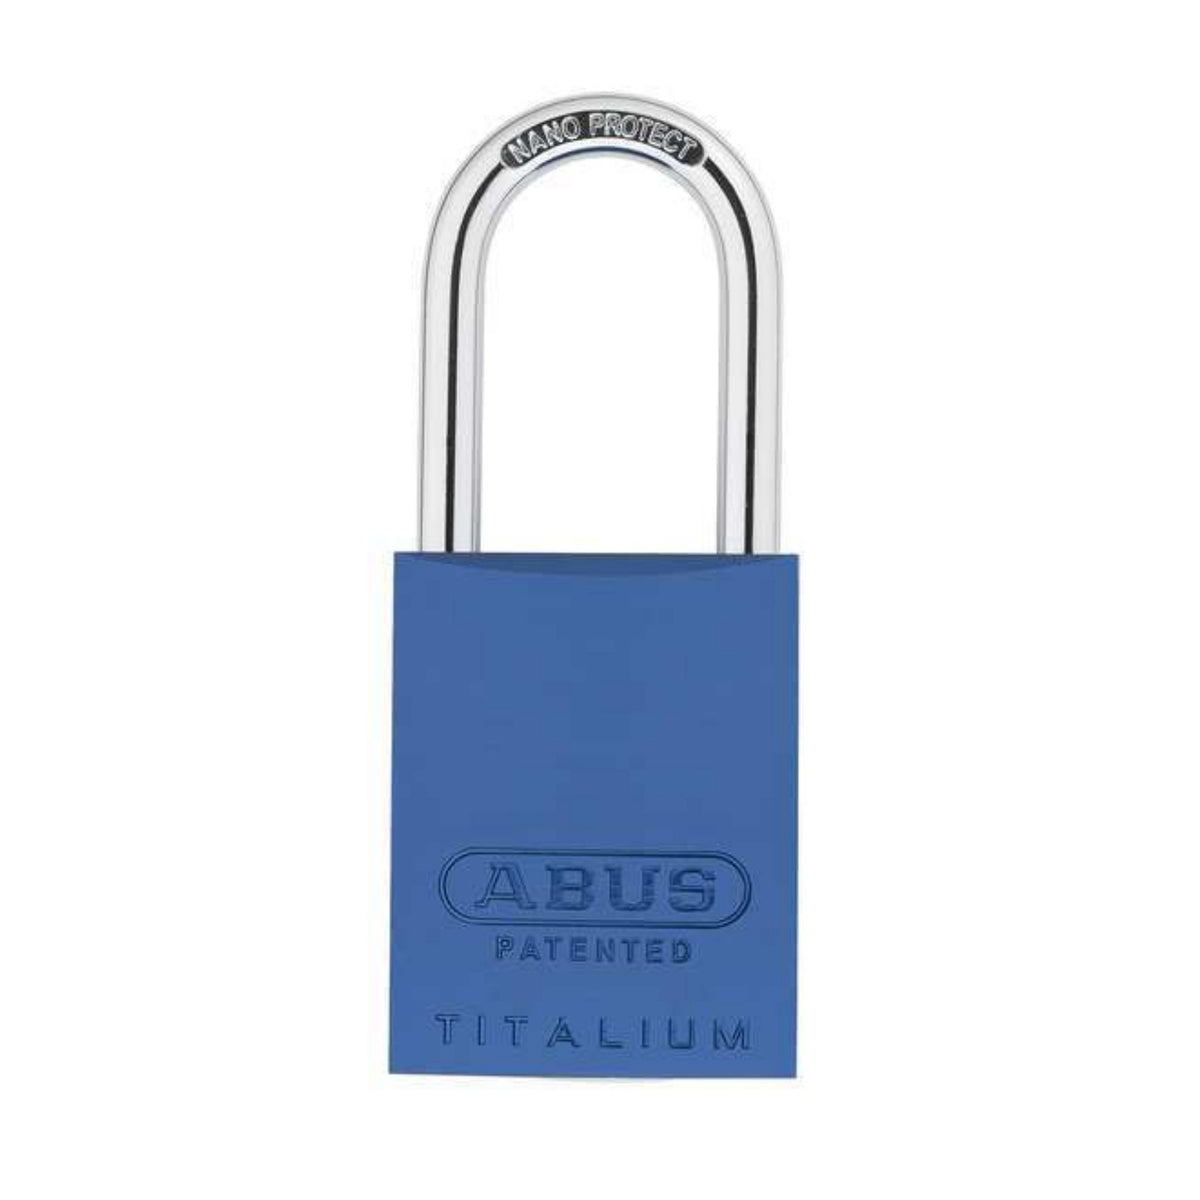 Abus 83AL/40-306 Blue Titalium Safety Lock with Schlage Keyway - The Lock Source